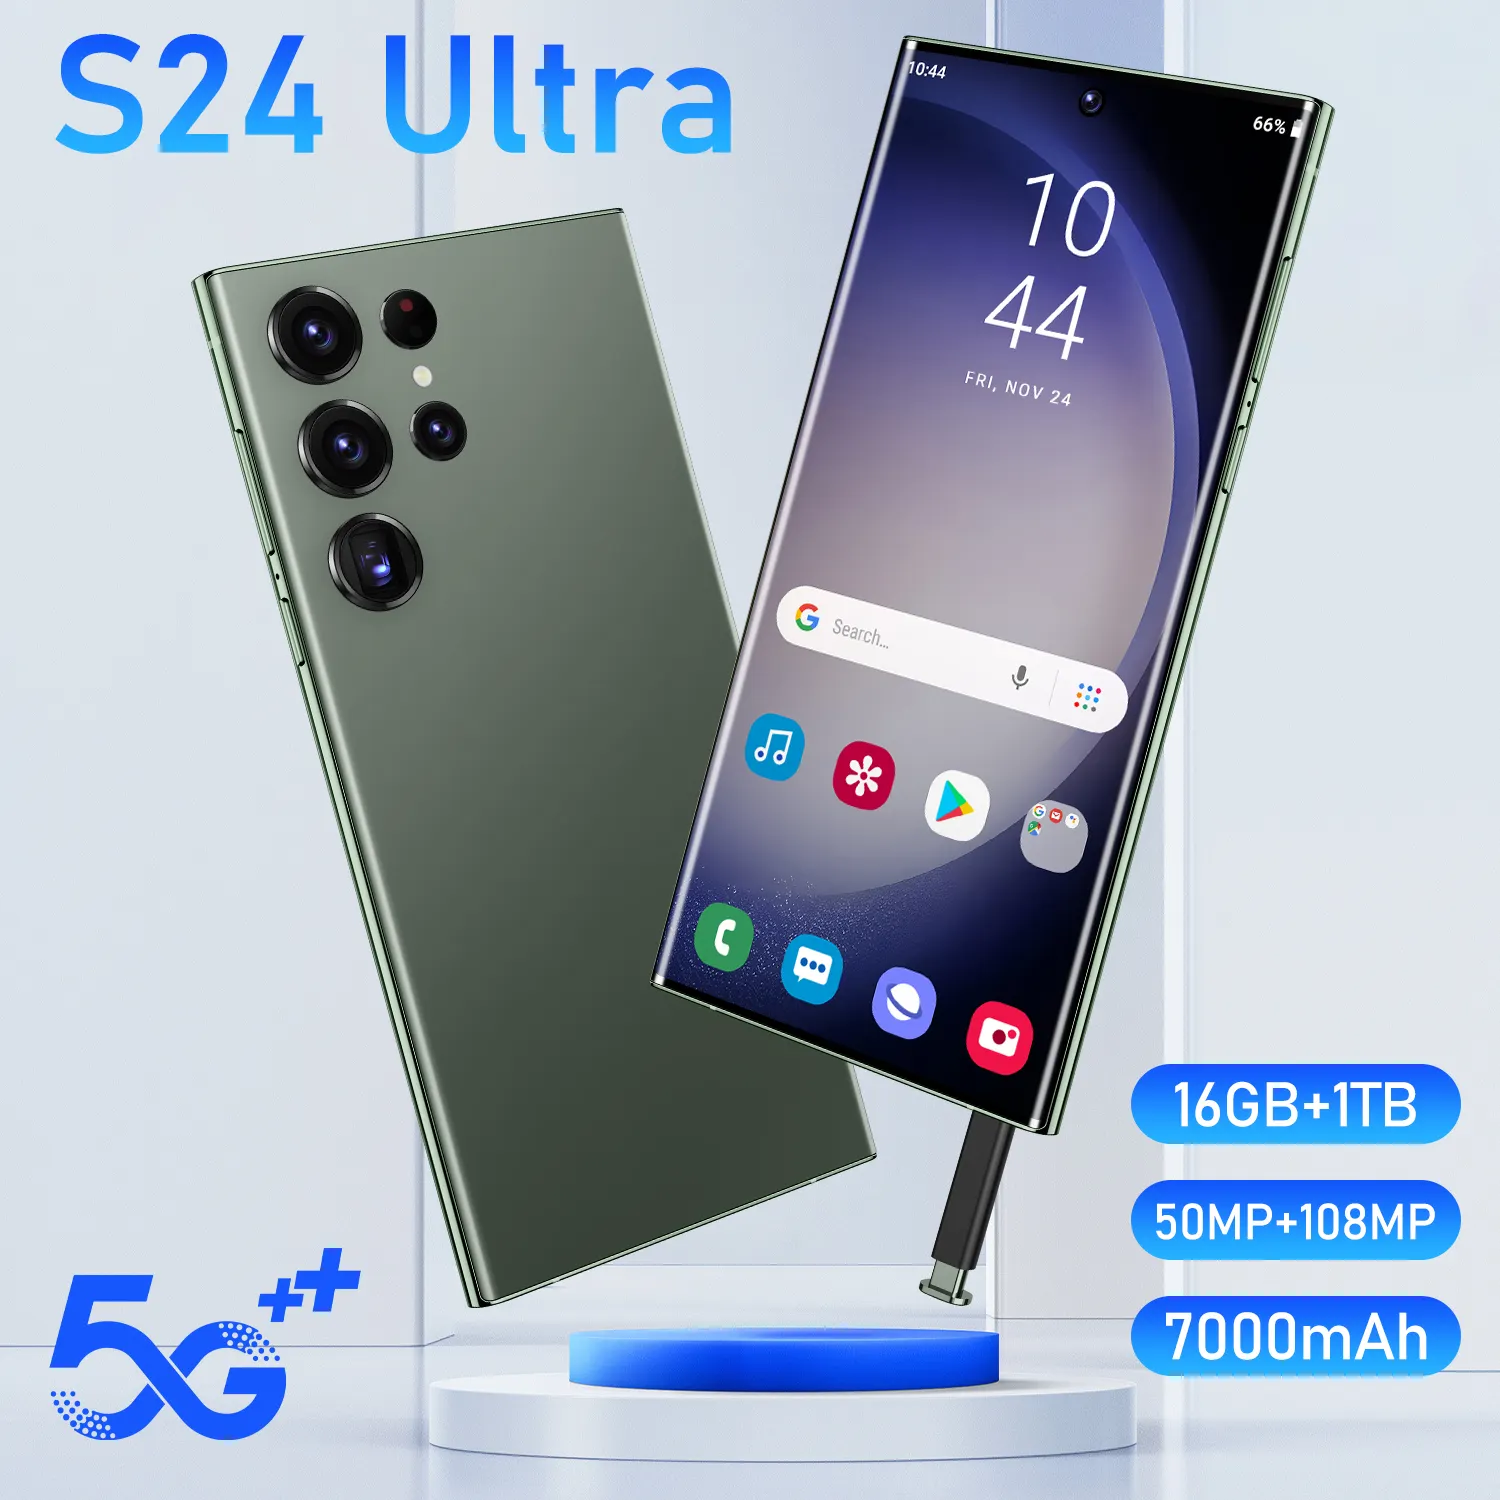 Originele Telefoons S24 Ultra Smartphones Voor S24 Ultra 16Gb + 1Tb 5G Dual Sim Mobiele Telefoon 5G Smartphone Mobiele Telefoons